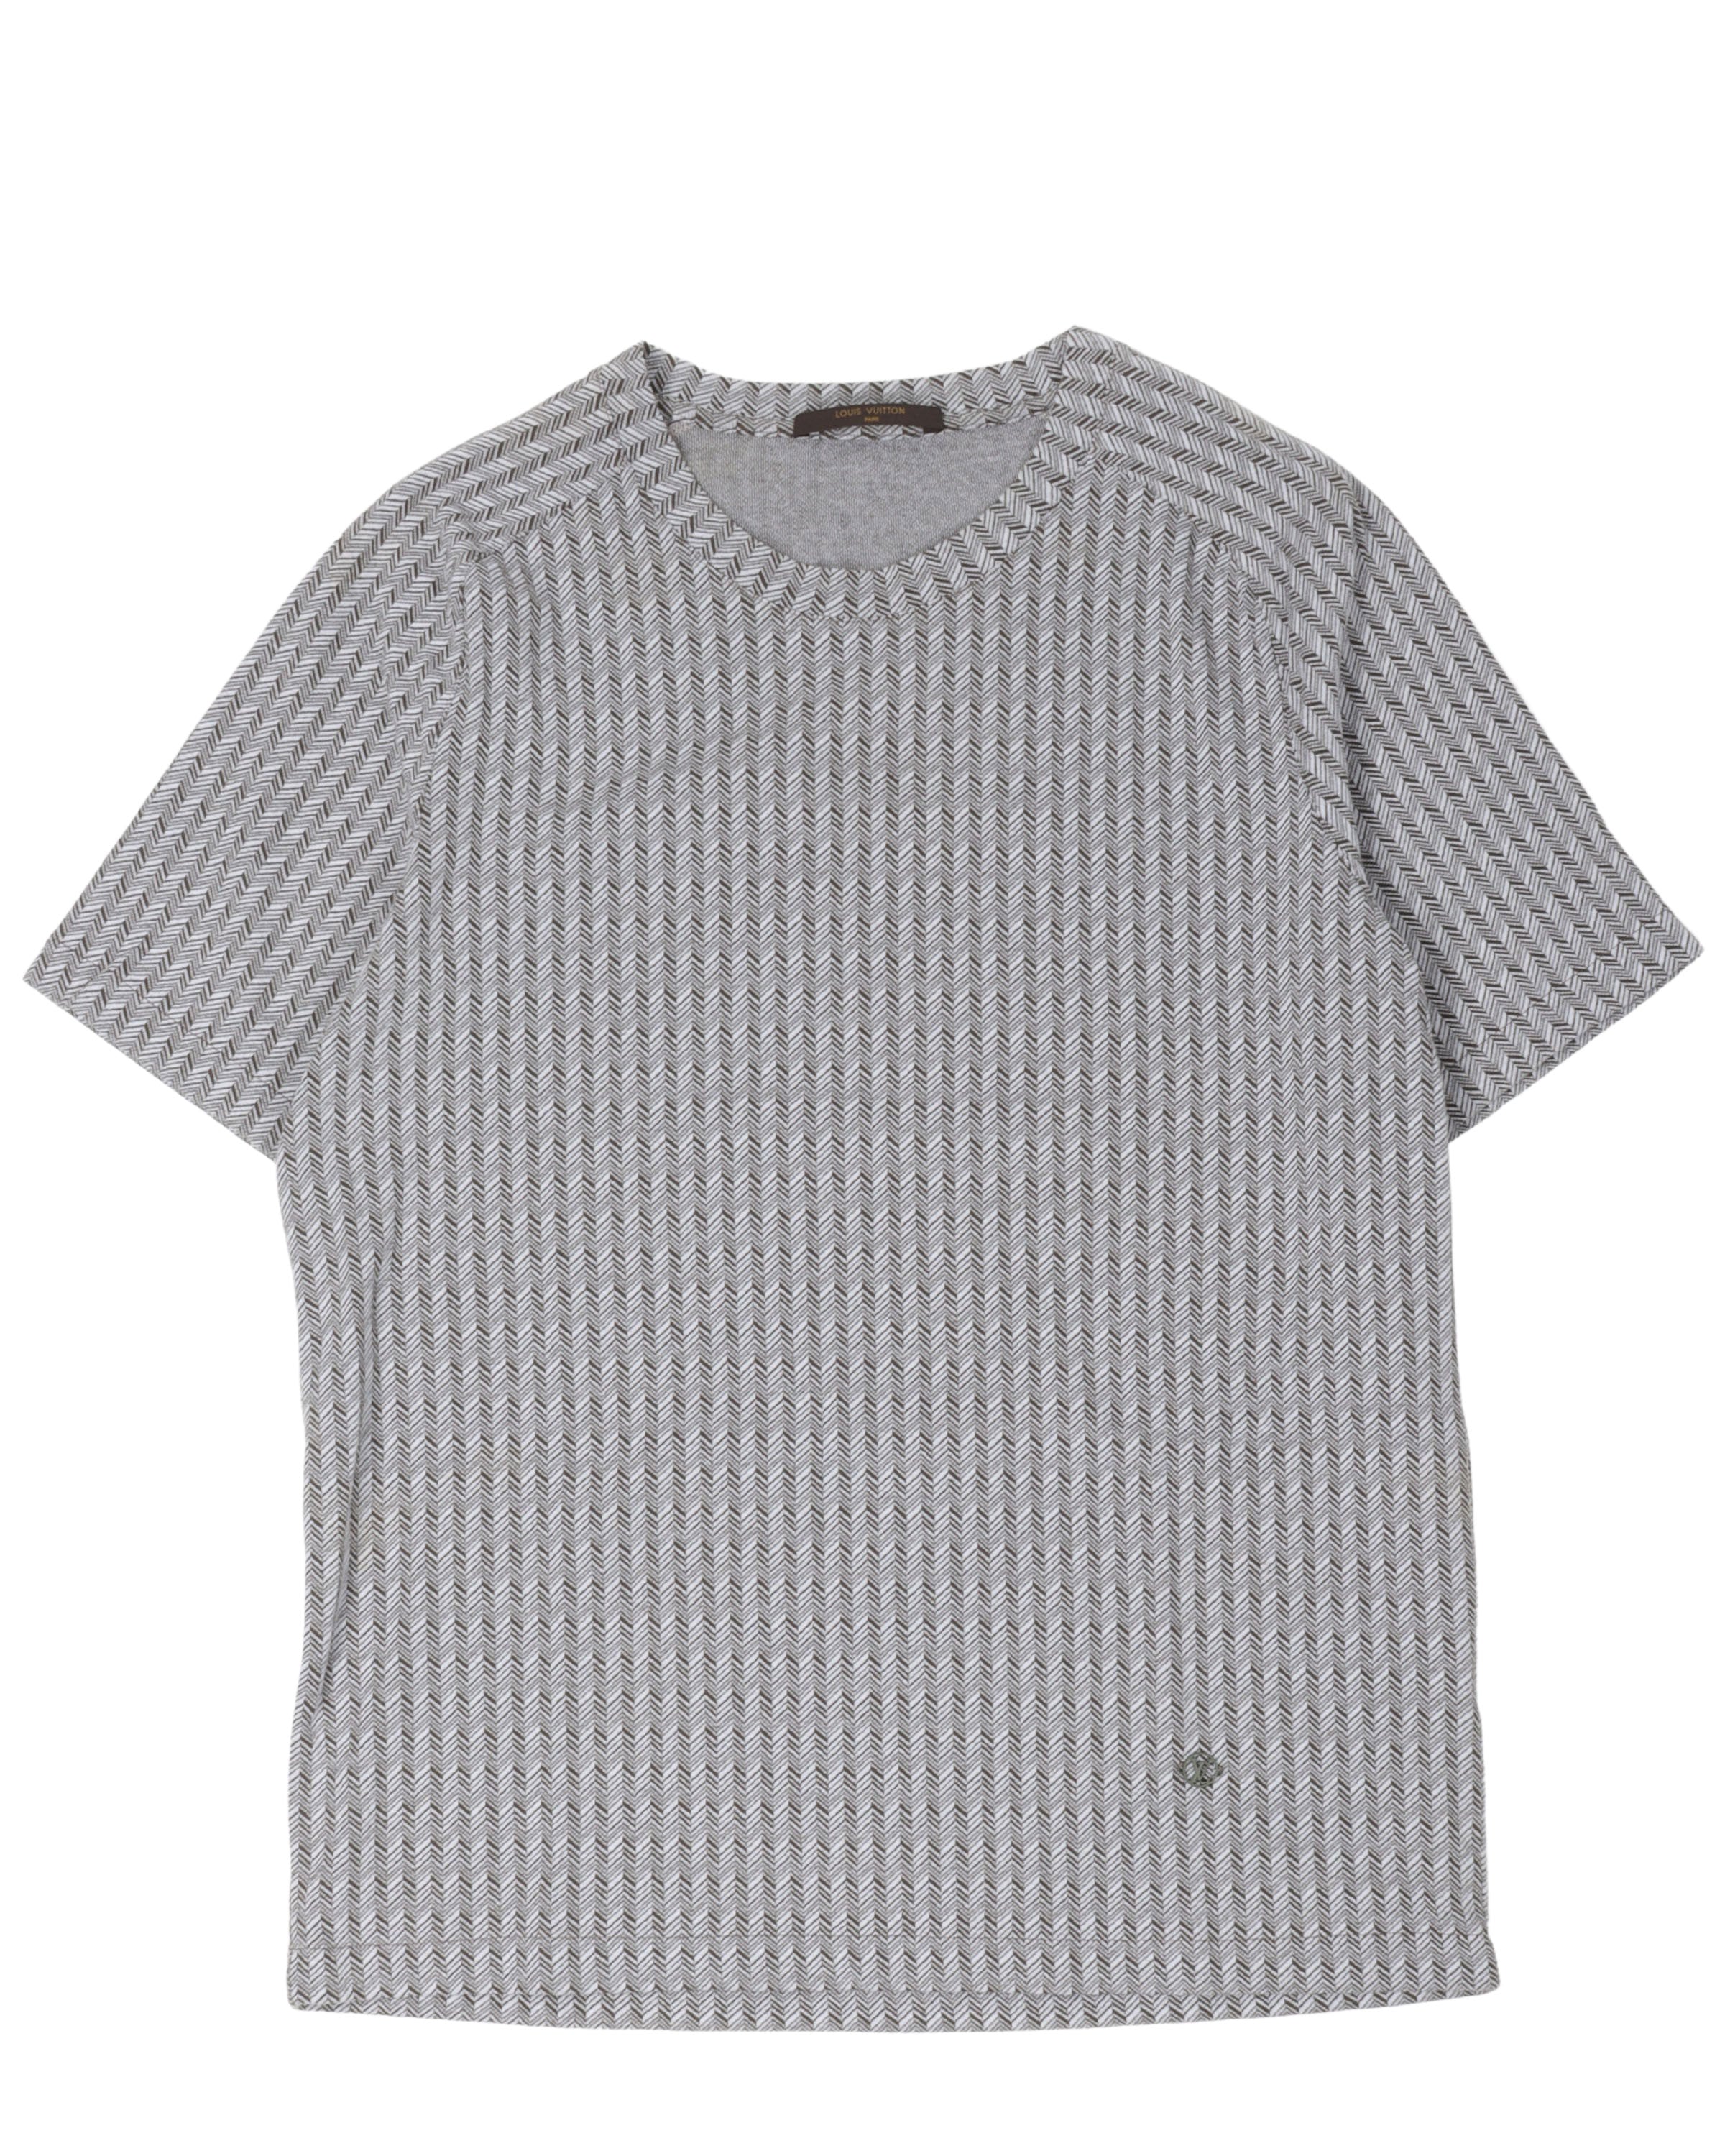 Louis Vuitton Herringbone Knit T-Shirt